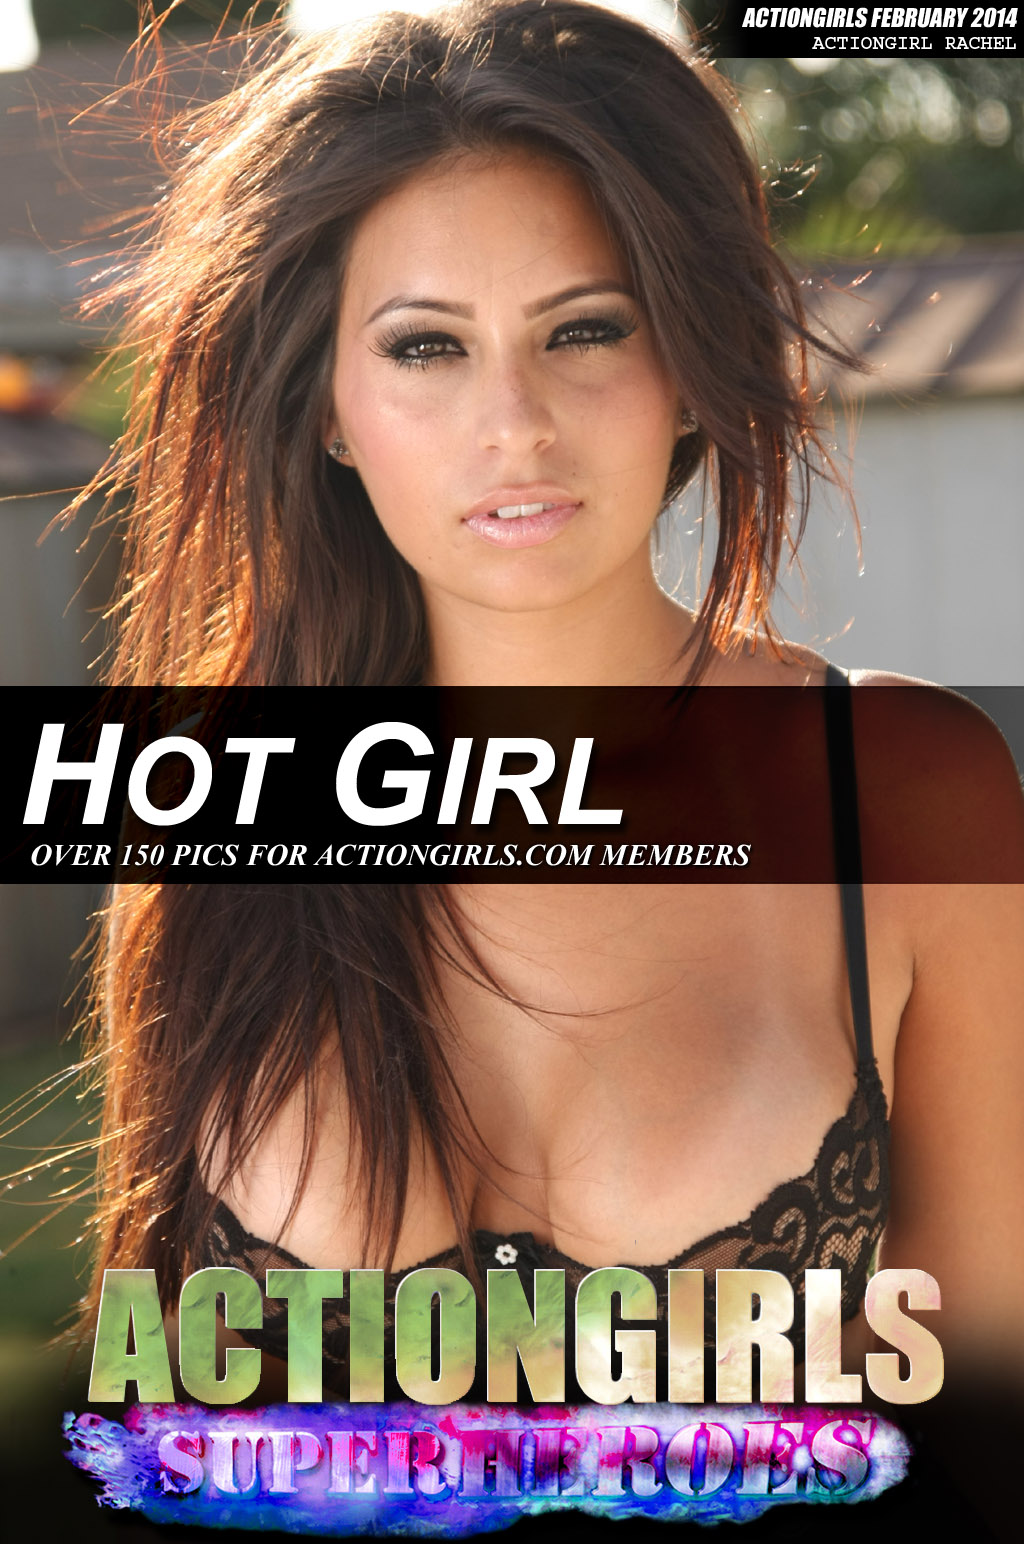 Rachel: Hot Girl